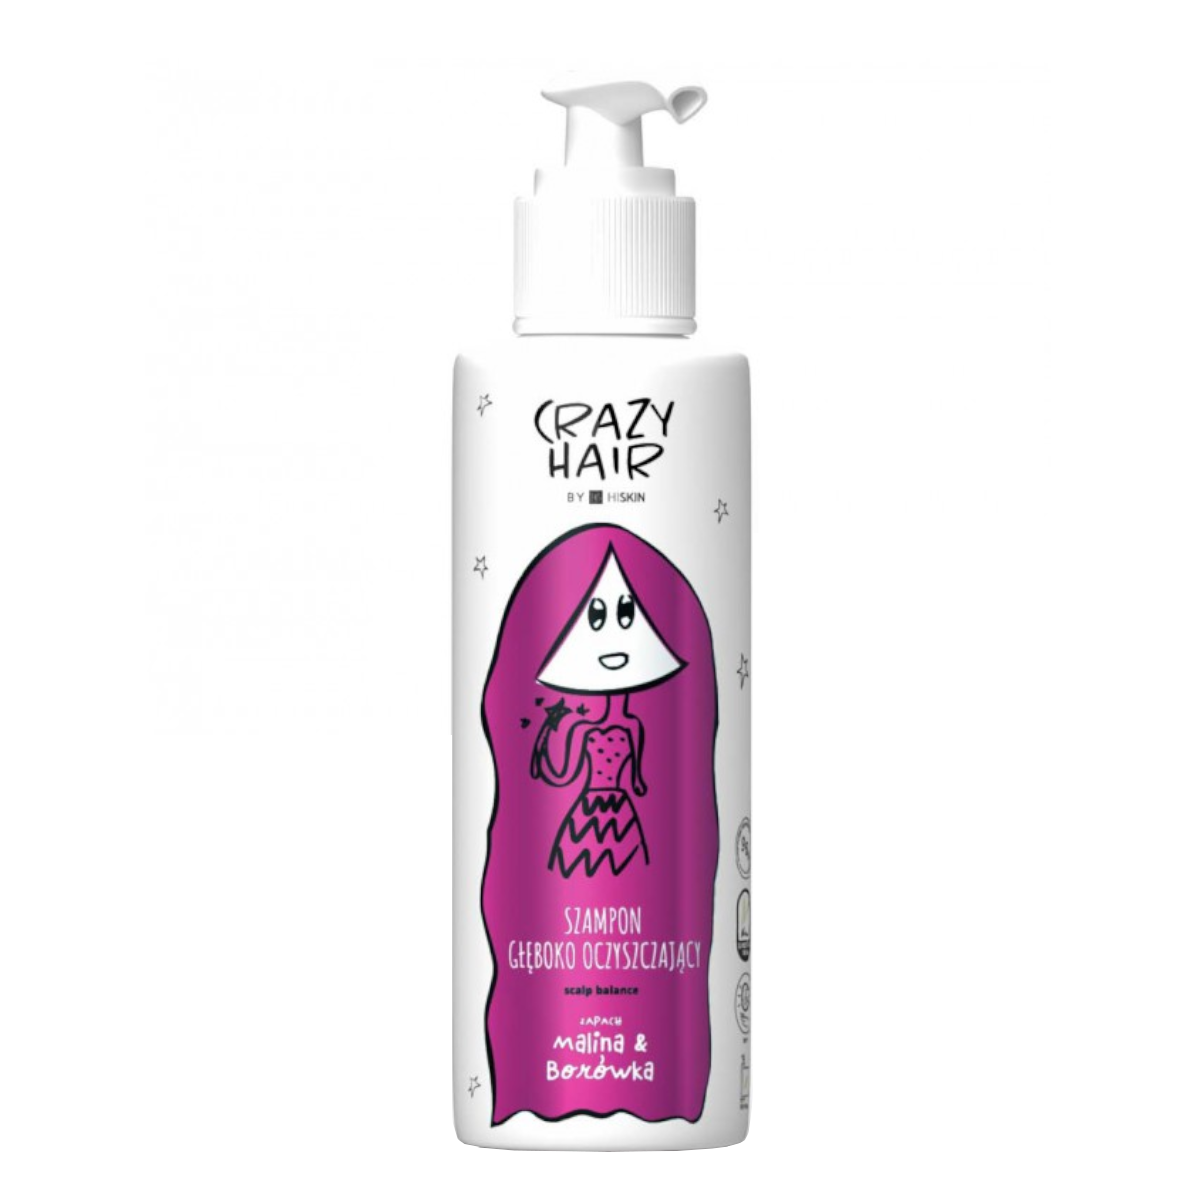 Crazy Hair Scalp Balance Deep Cleansing Shampoo Raspberry & Blueberry